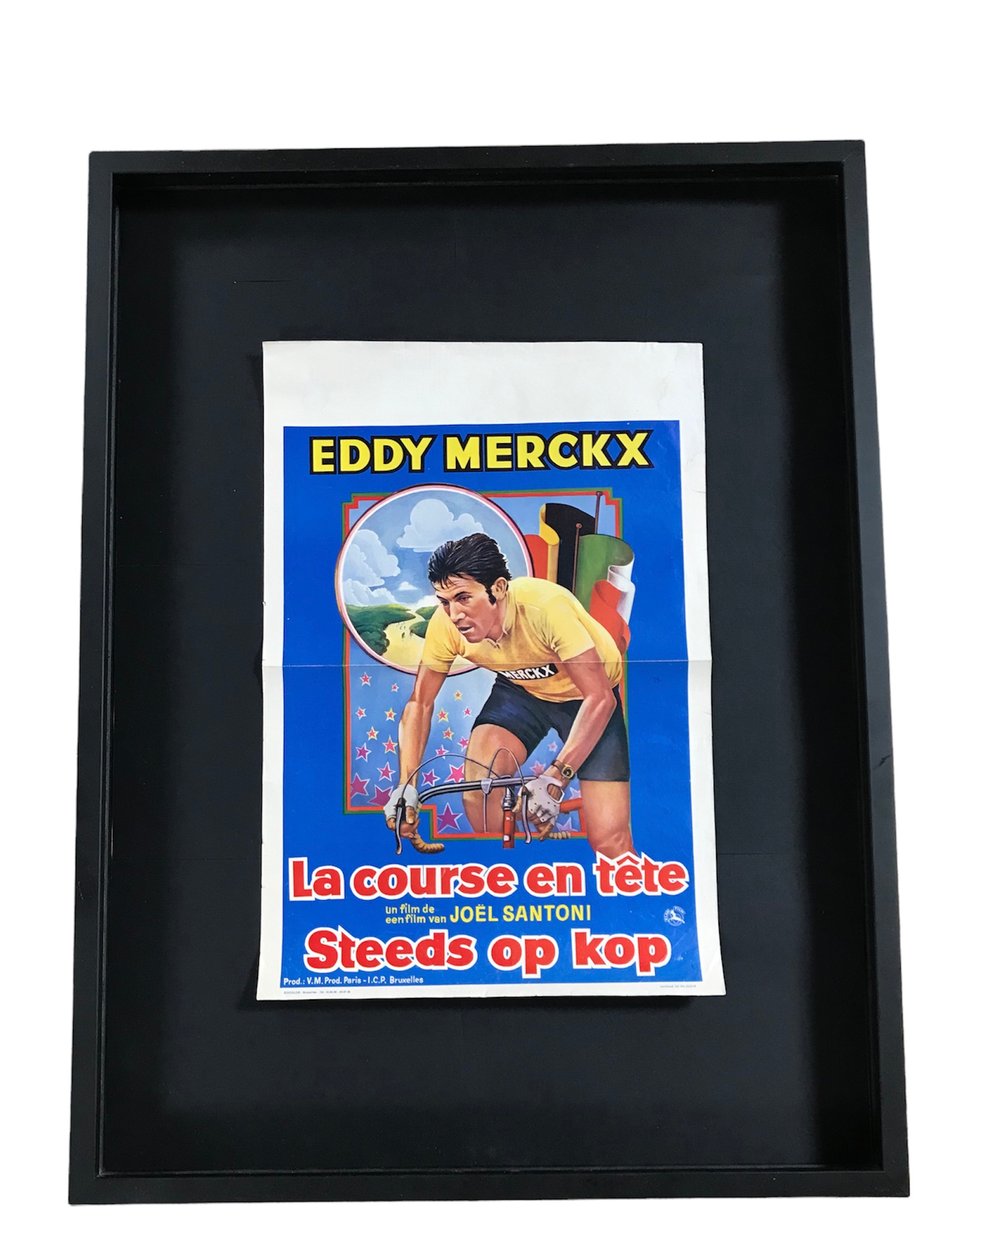 Original Belgian movie poster for Joel Santoni's film about Eddy Merckx in 1974.